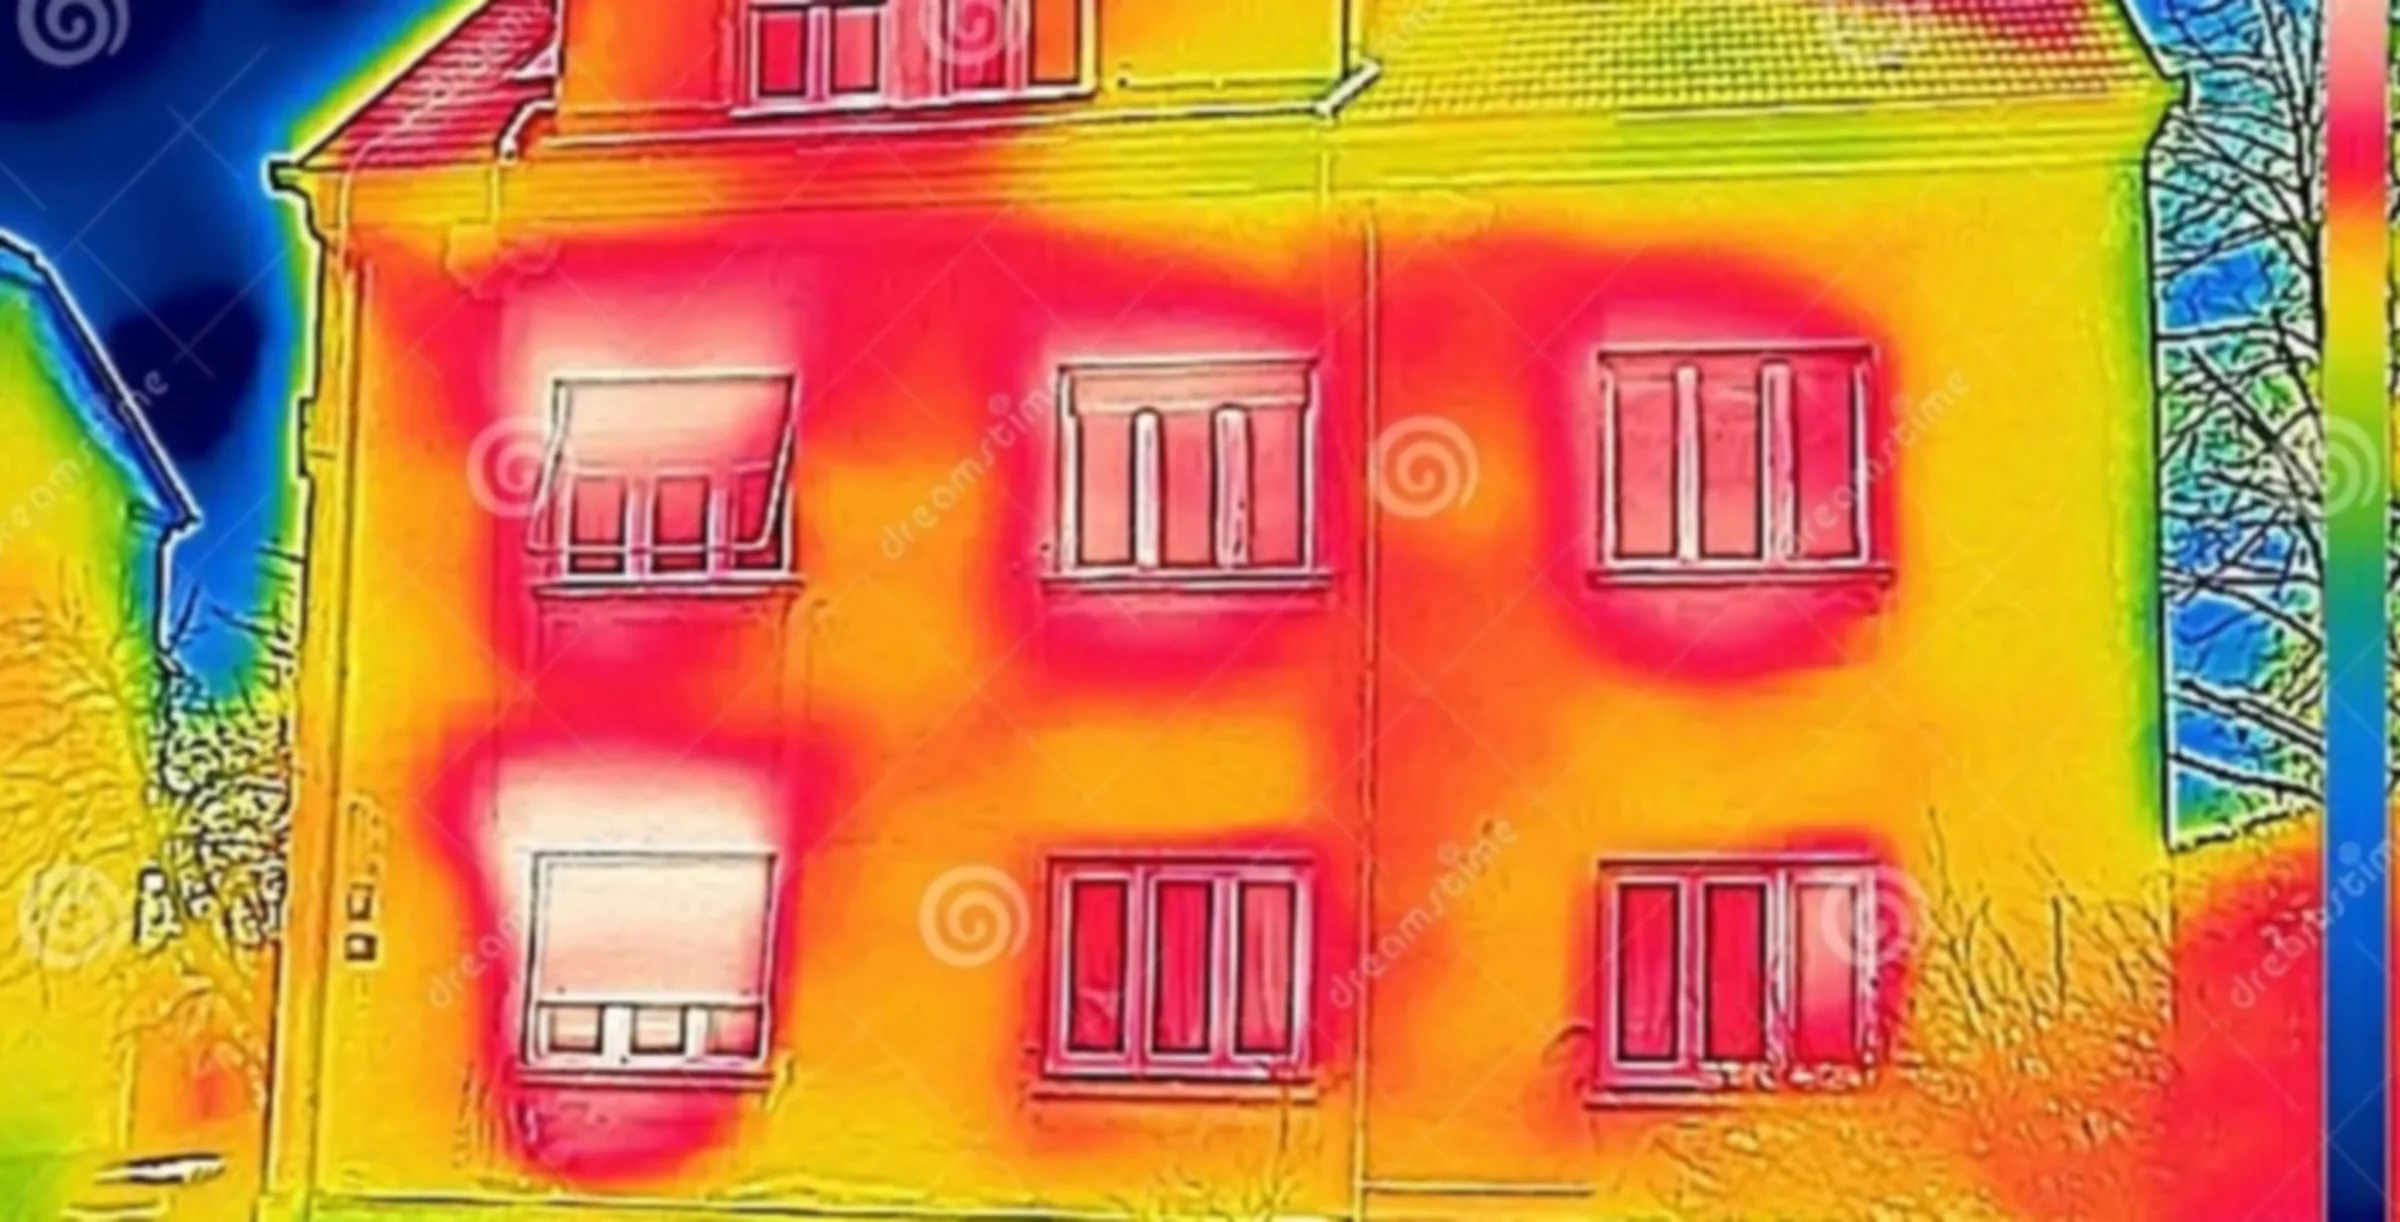 Overheating on the façades